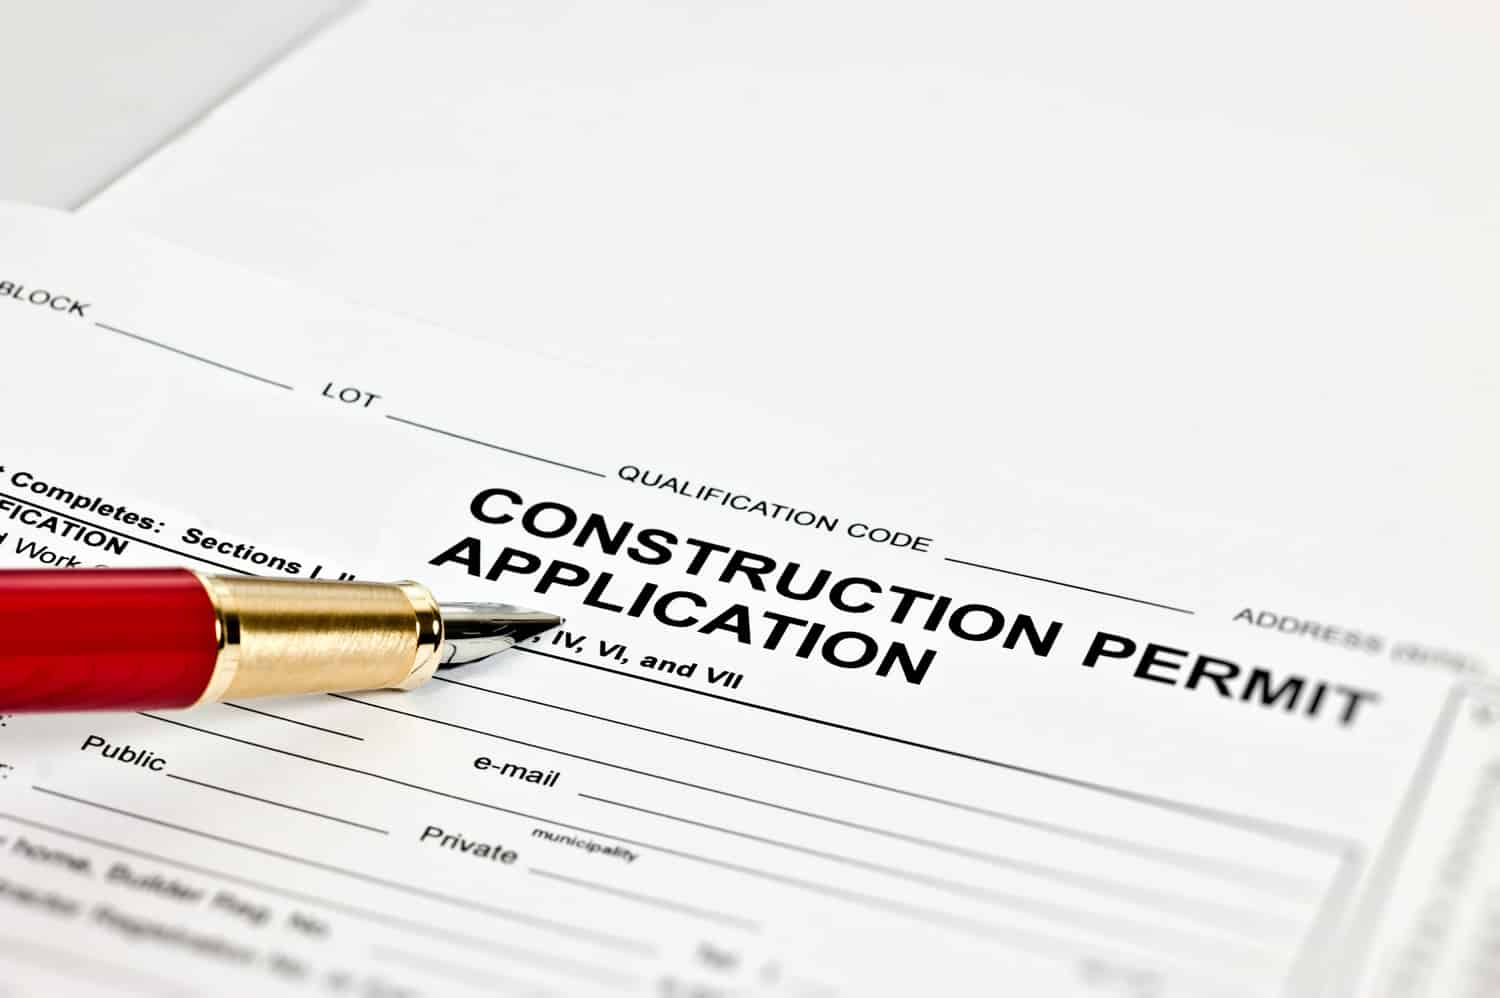 Construction Permit Application